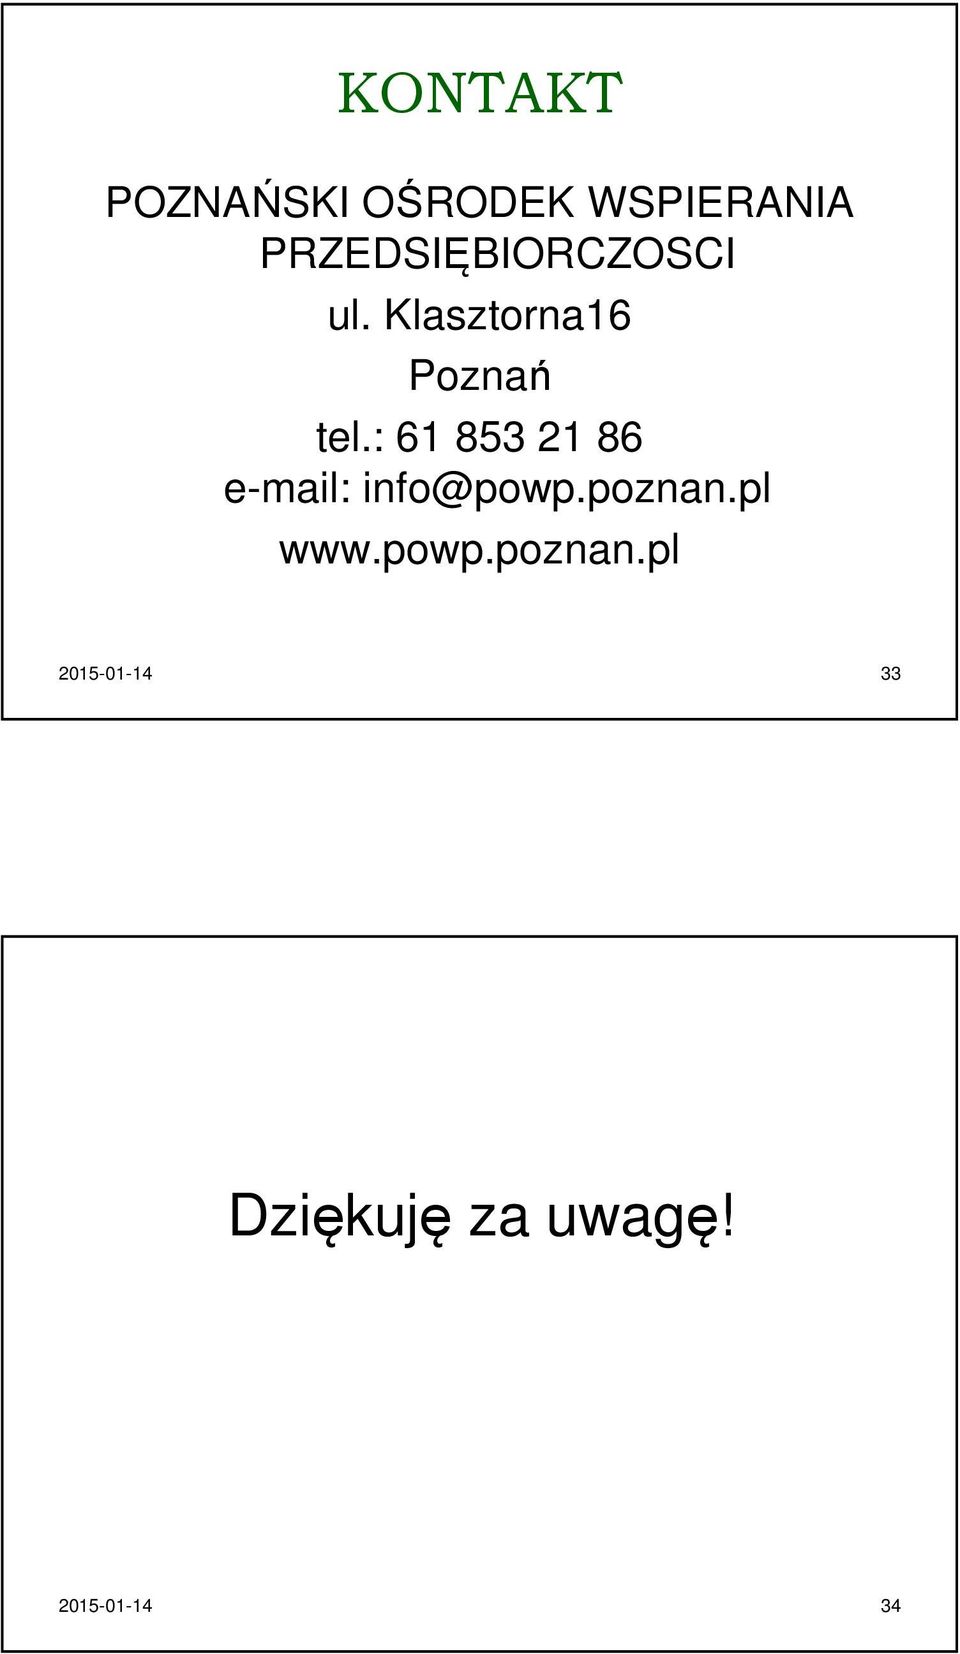 : 61 853 21 86 e-mail: info@powp.poznan.pl www.